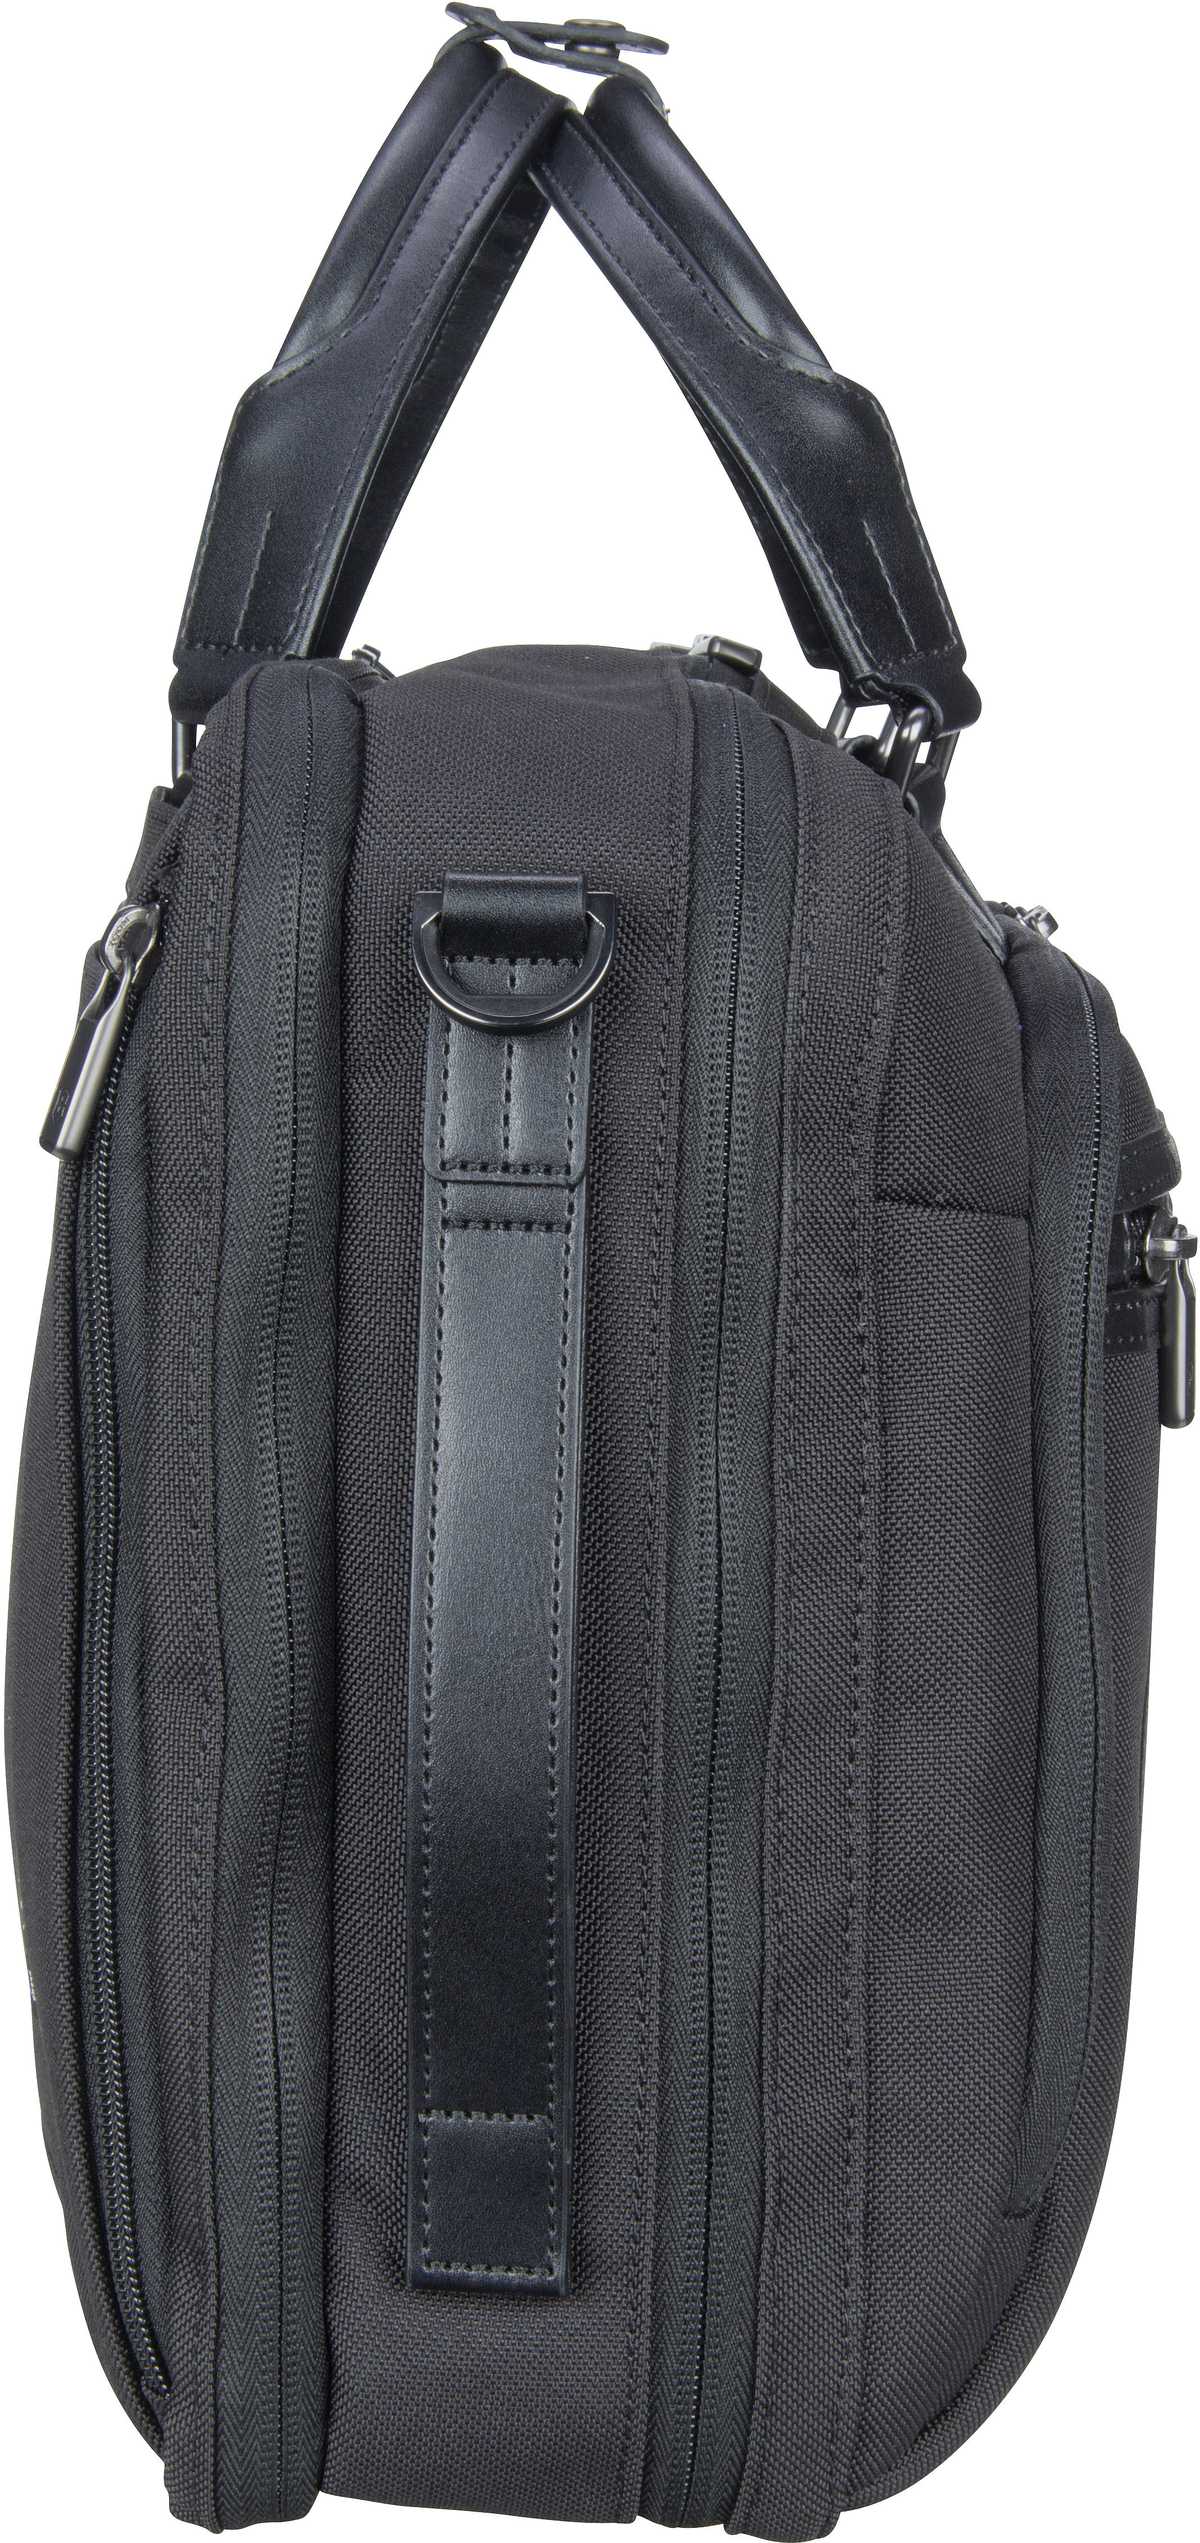 Victorinox Werks Professional Cordura 2-Way Carry Laptop Bag - Black